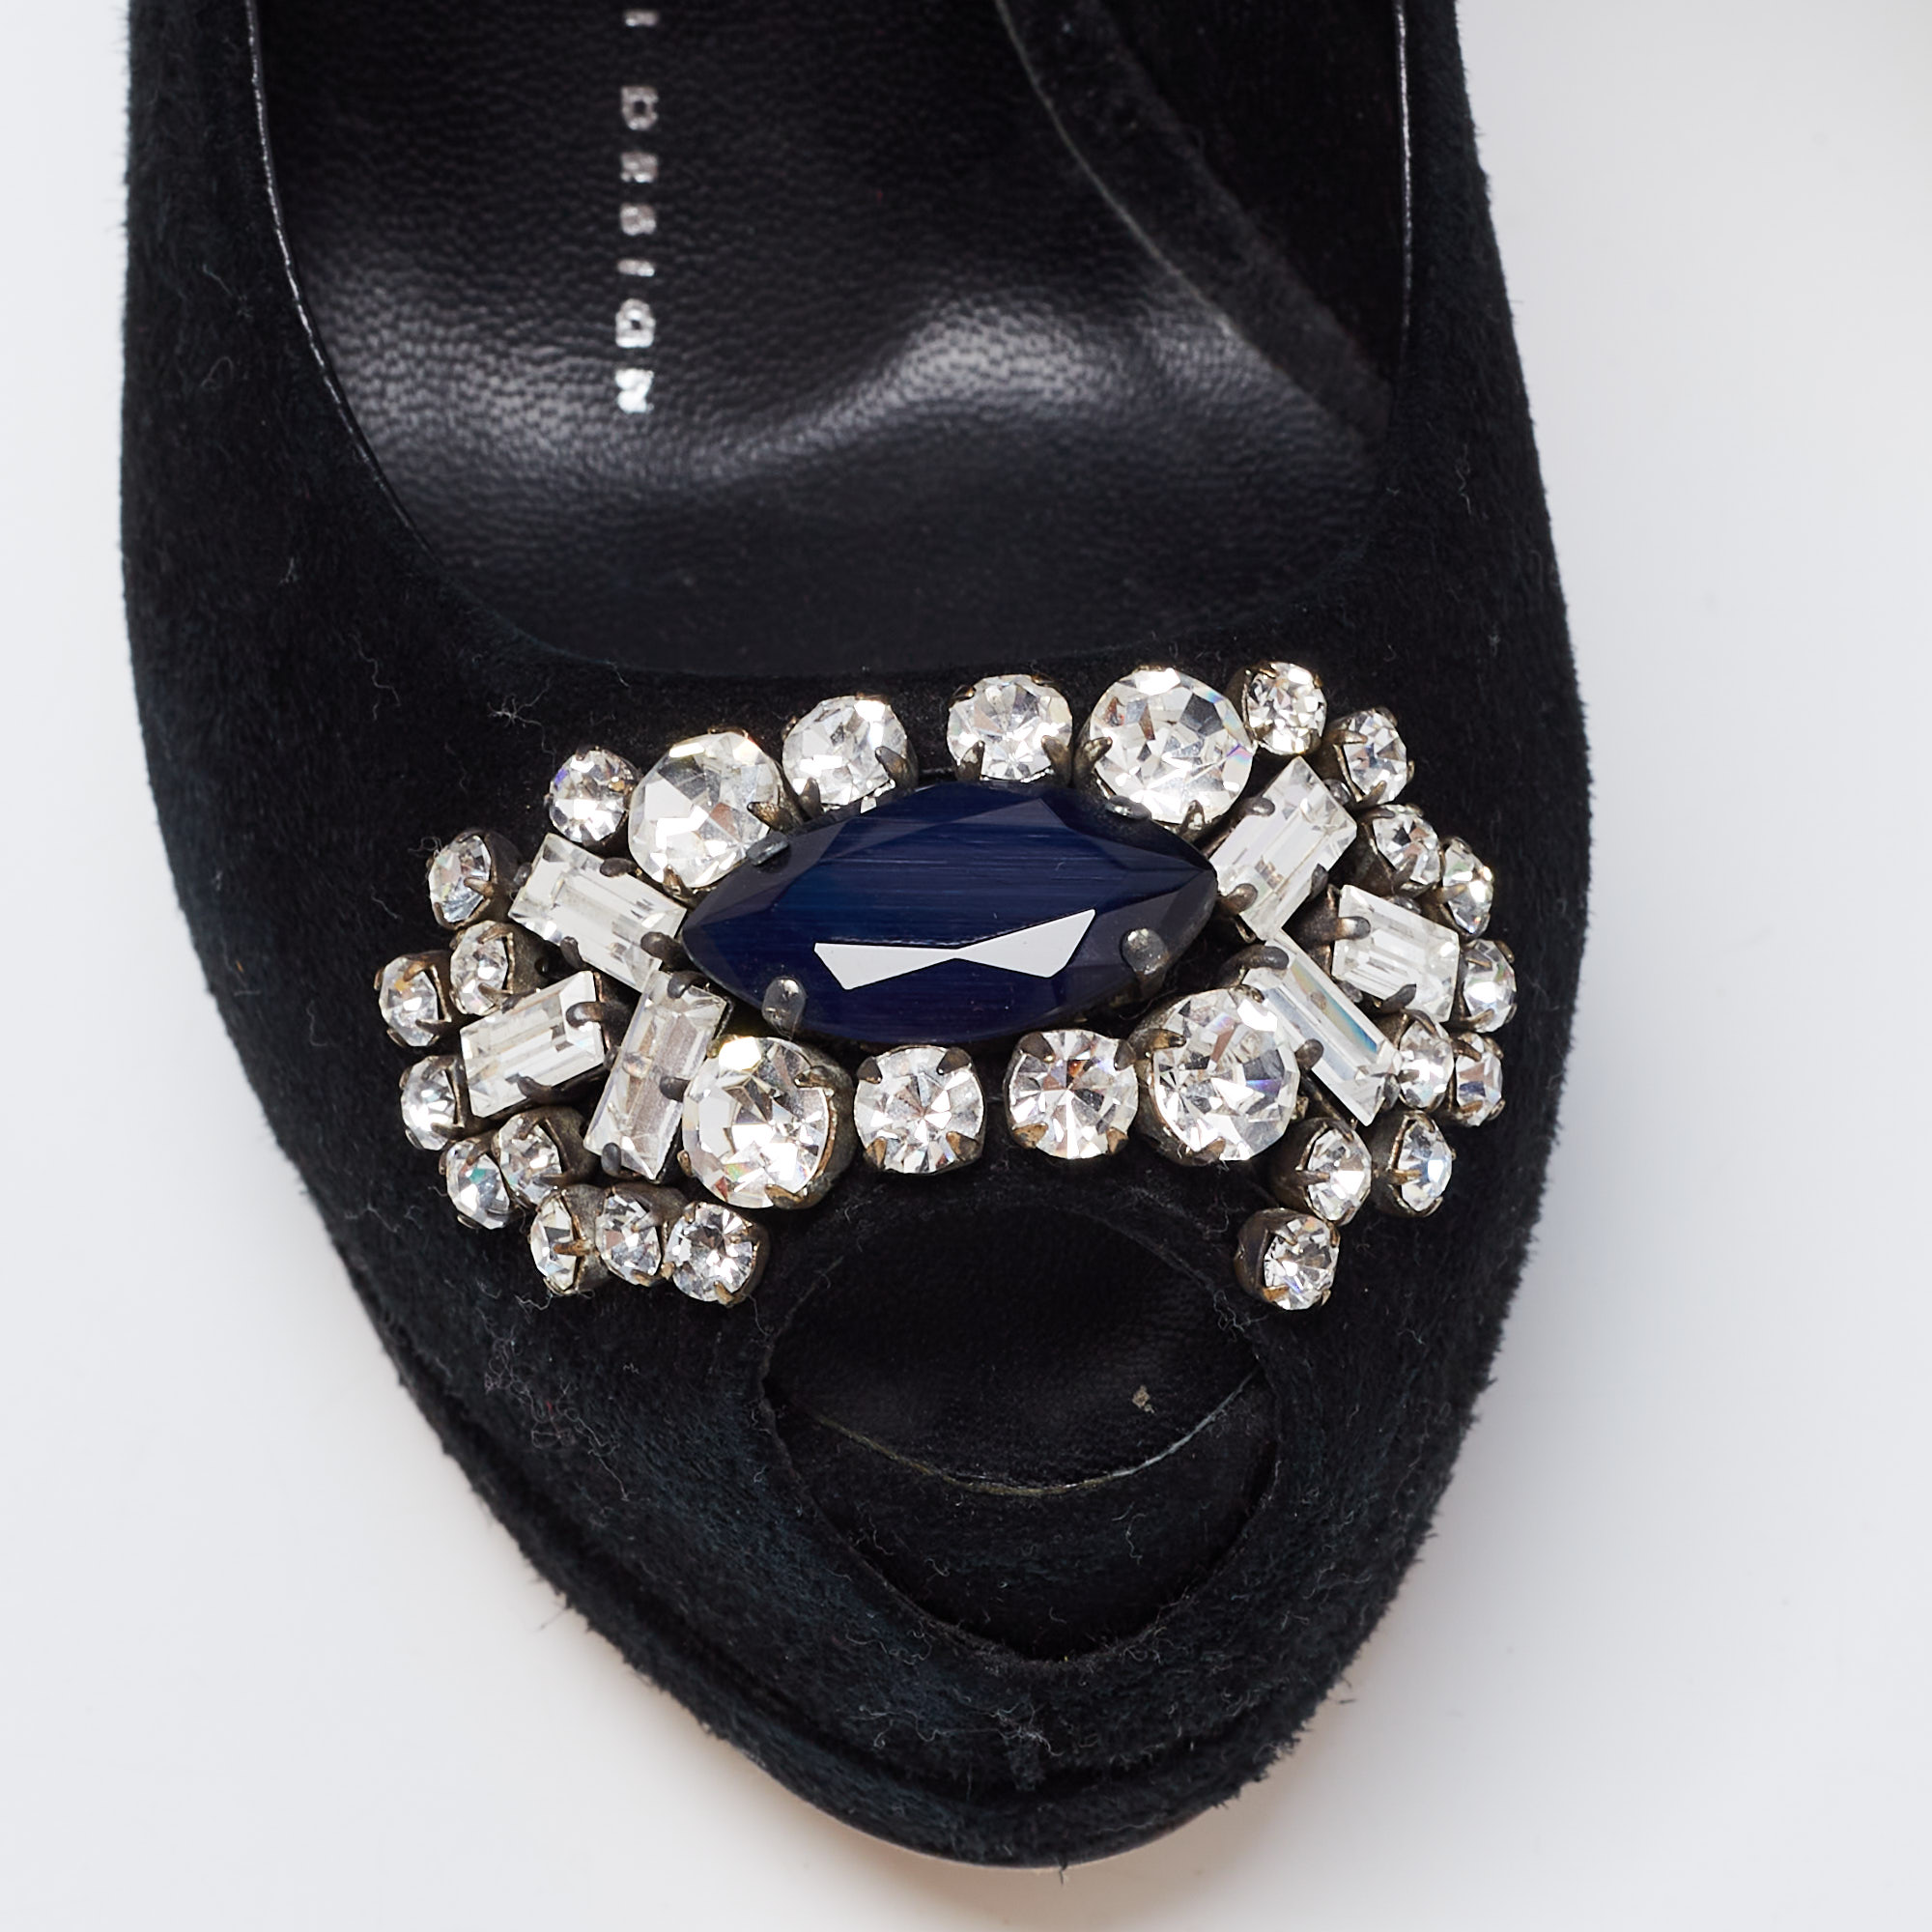 Giuseppe Zanotti Black Suede Crystal Embellished Ankle-Strap Peep-Toe Platform Pumps Size 35